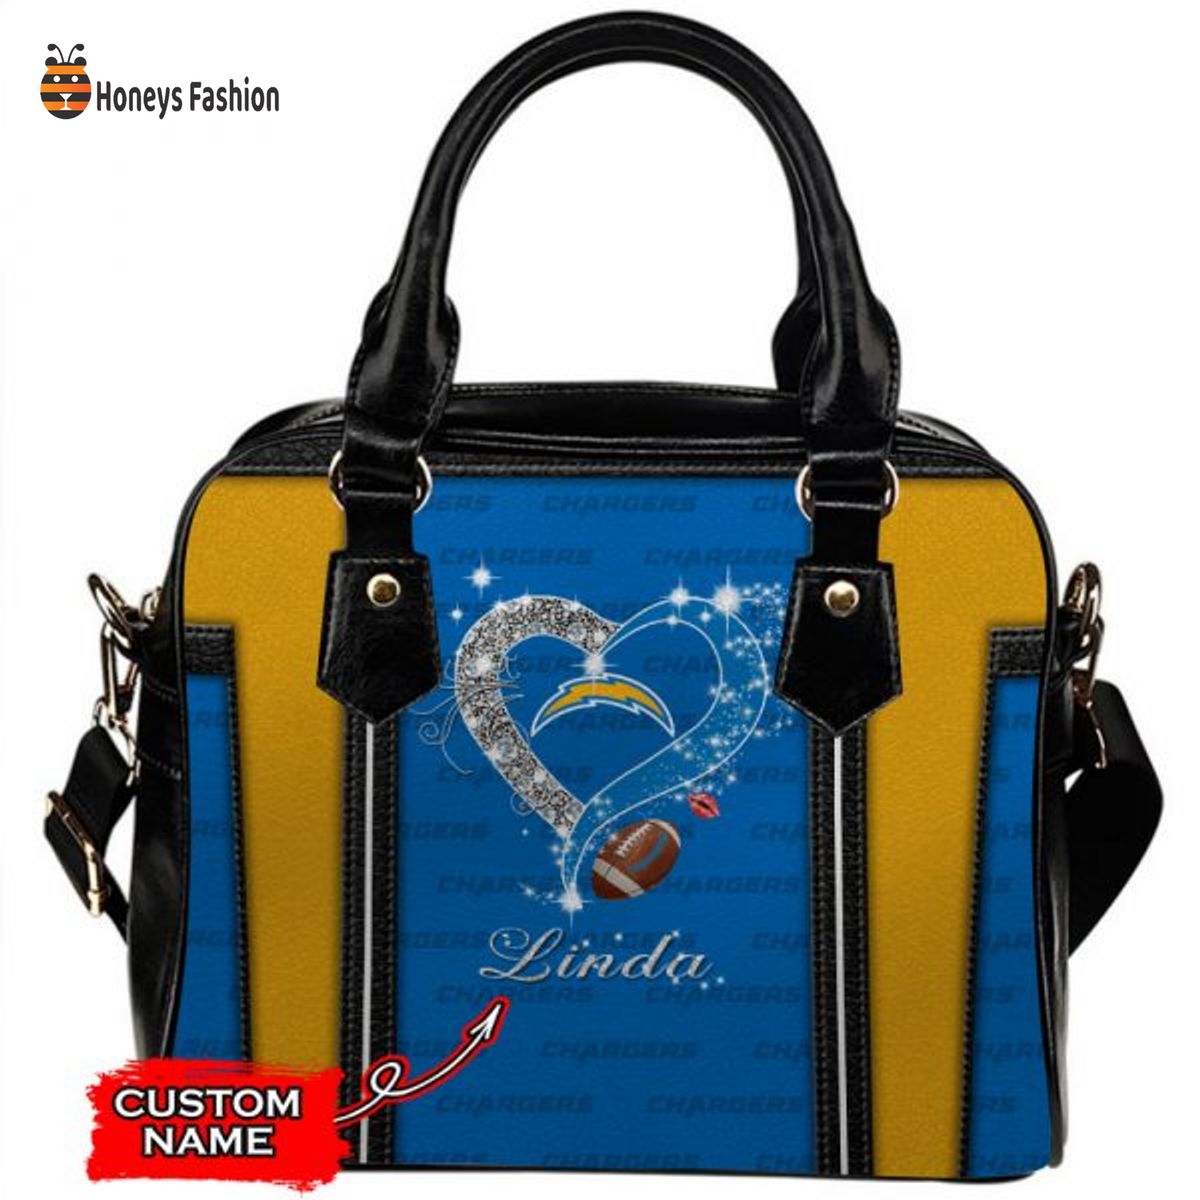 Los Angeles Chargers NFL Custom Name Leather Handbag Tote bag